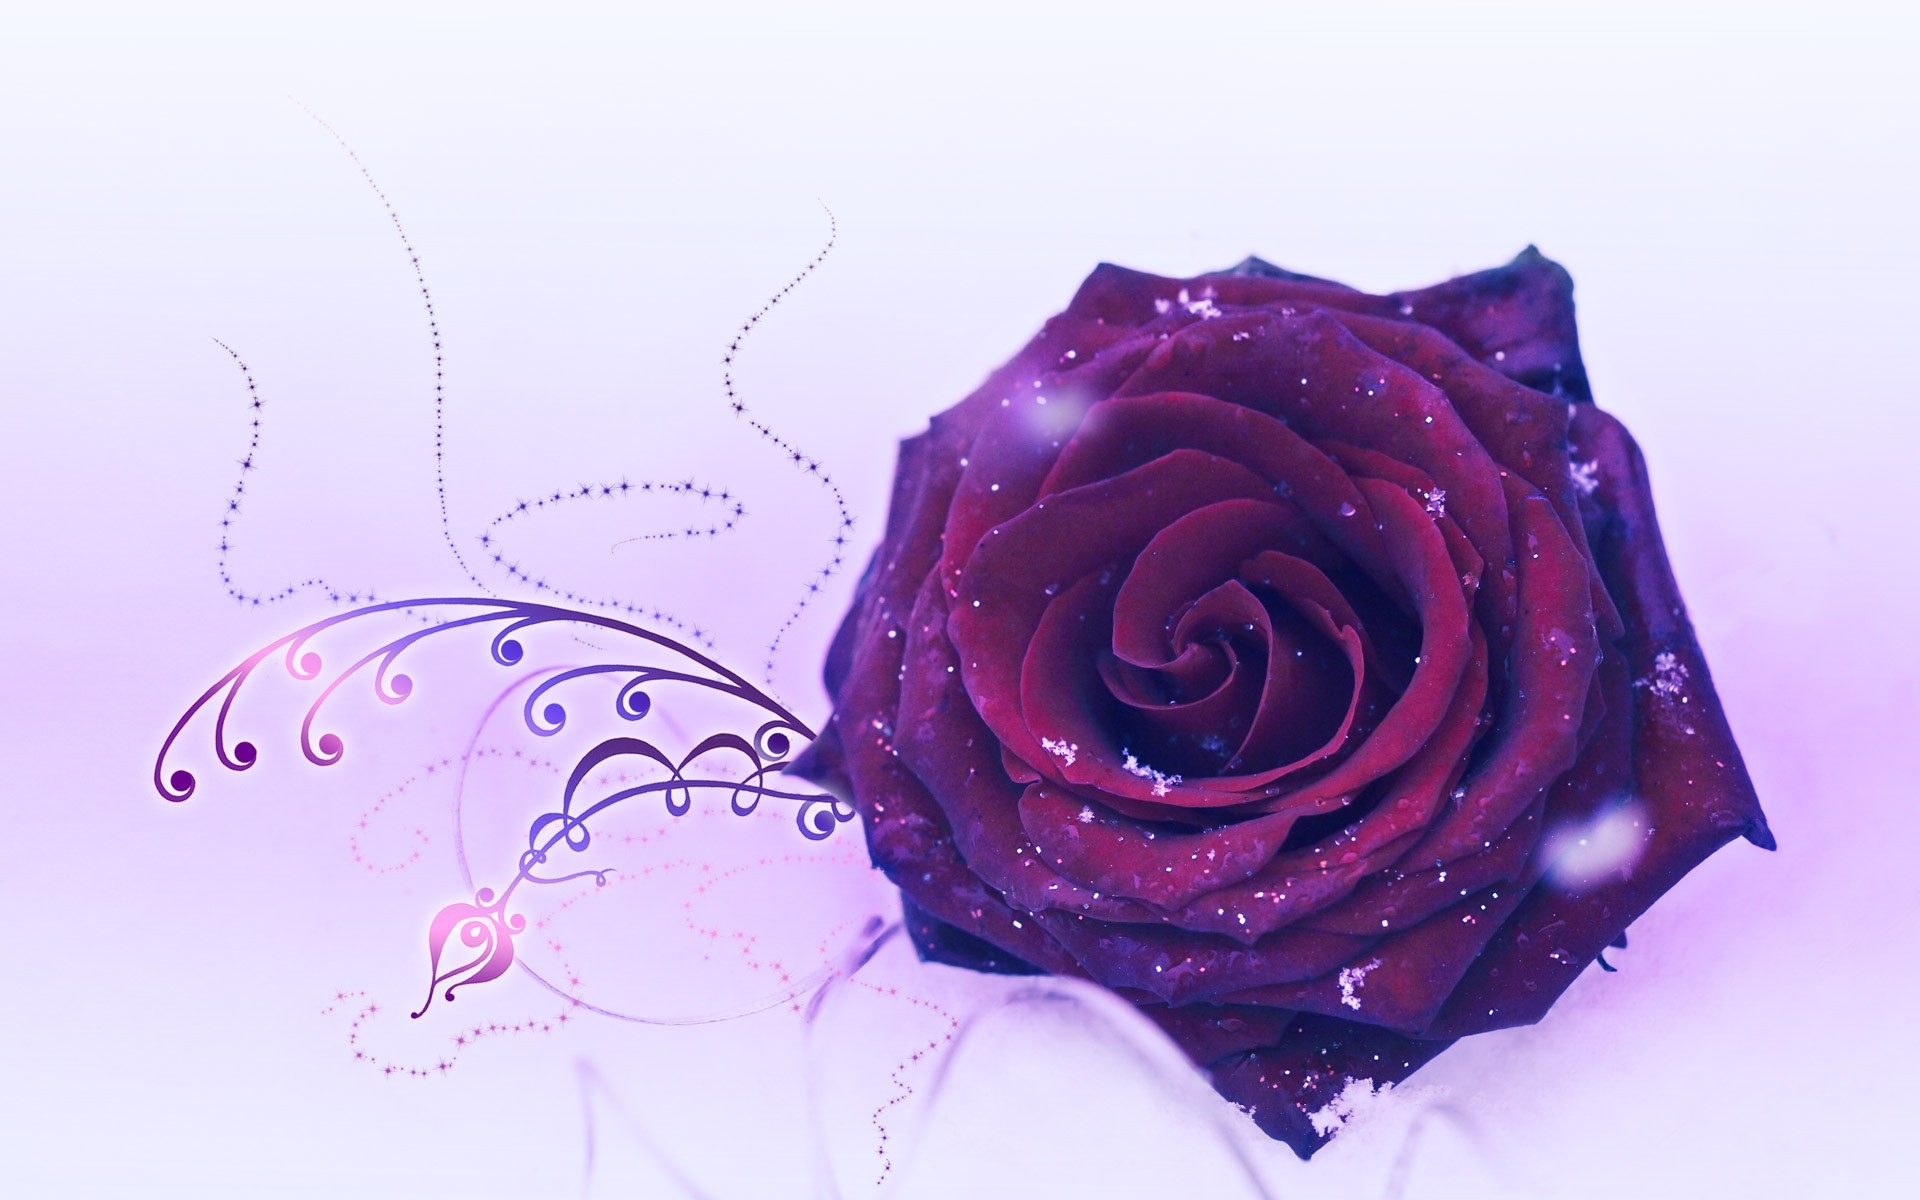 purple rose images free download